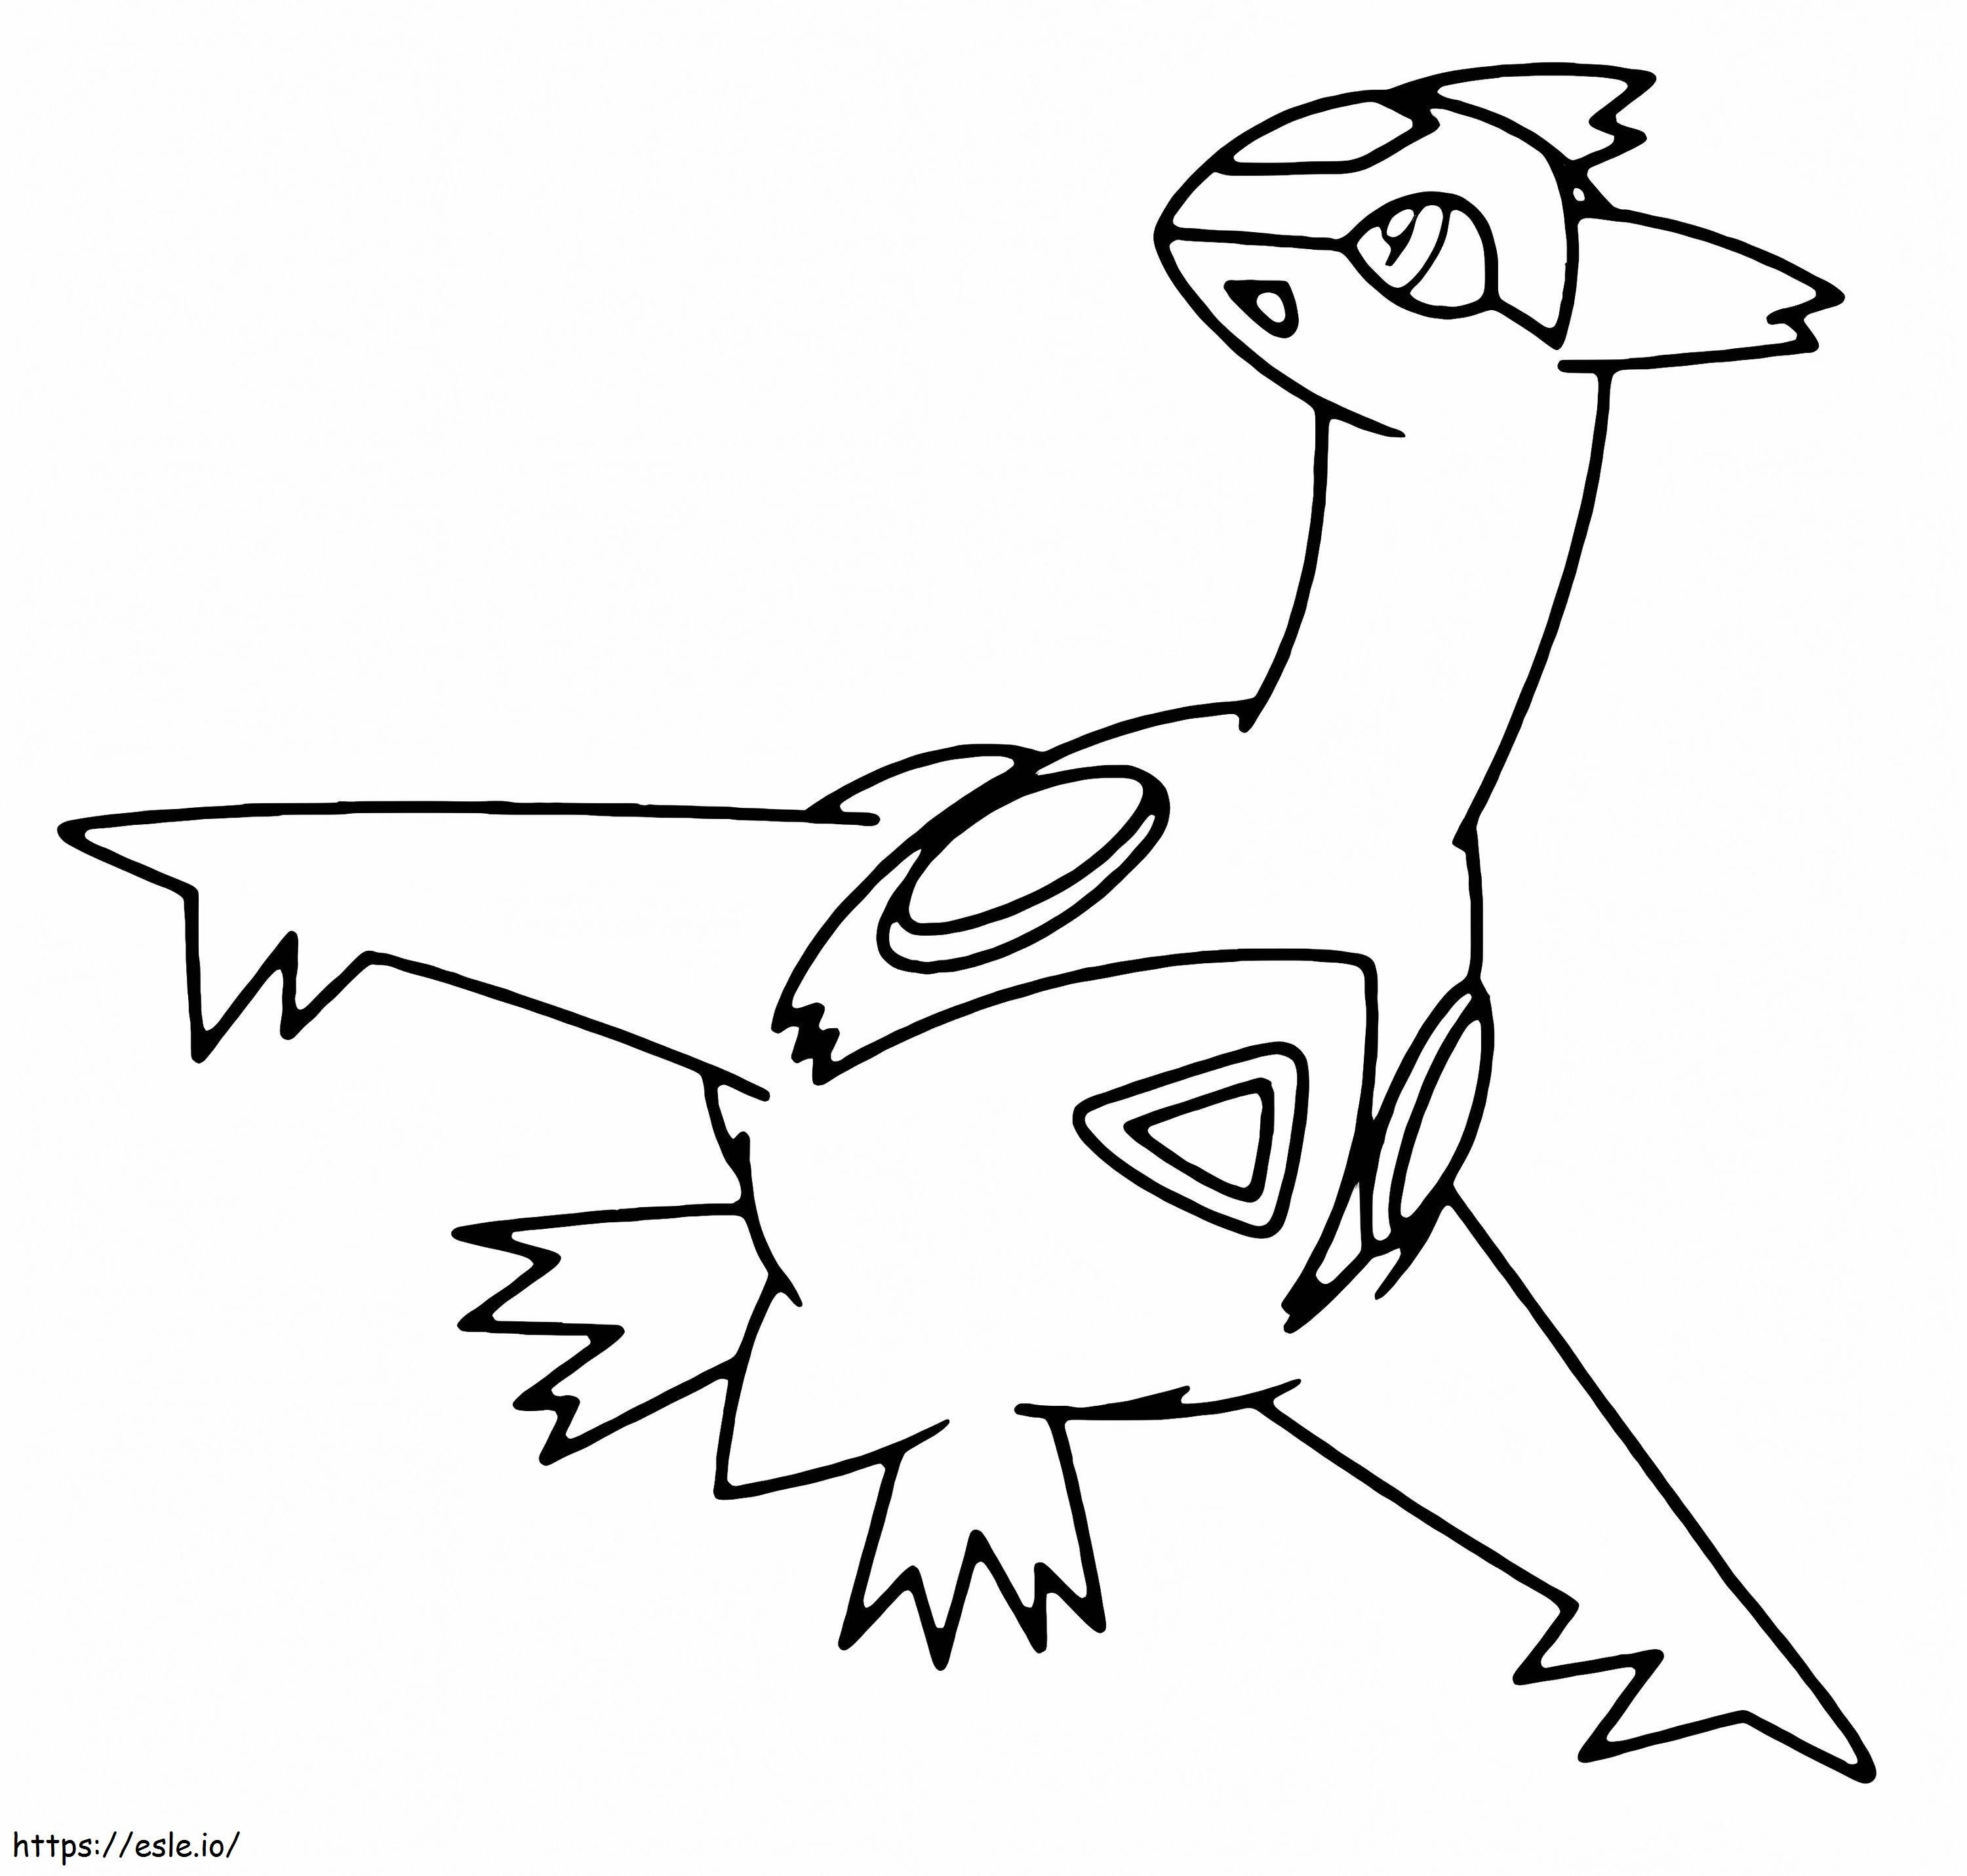 Printable Latias Pokemon coloring page